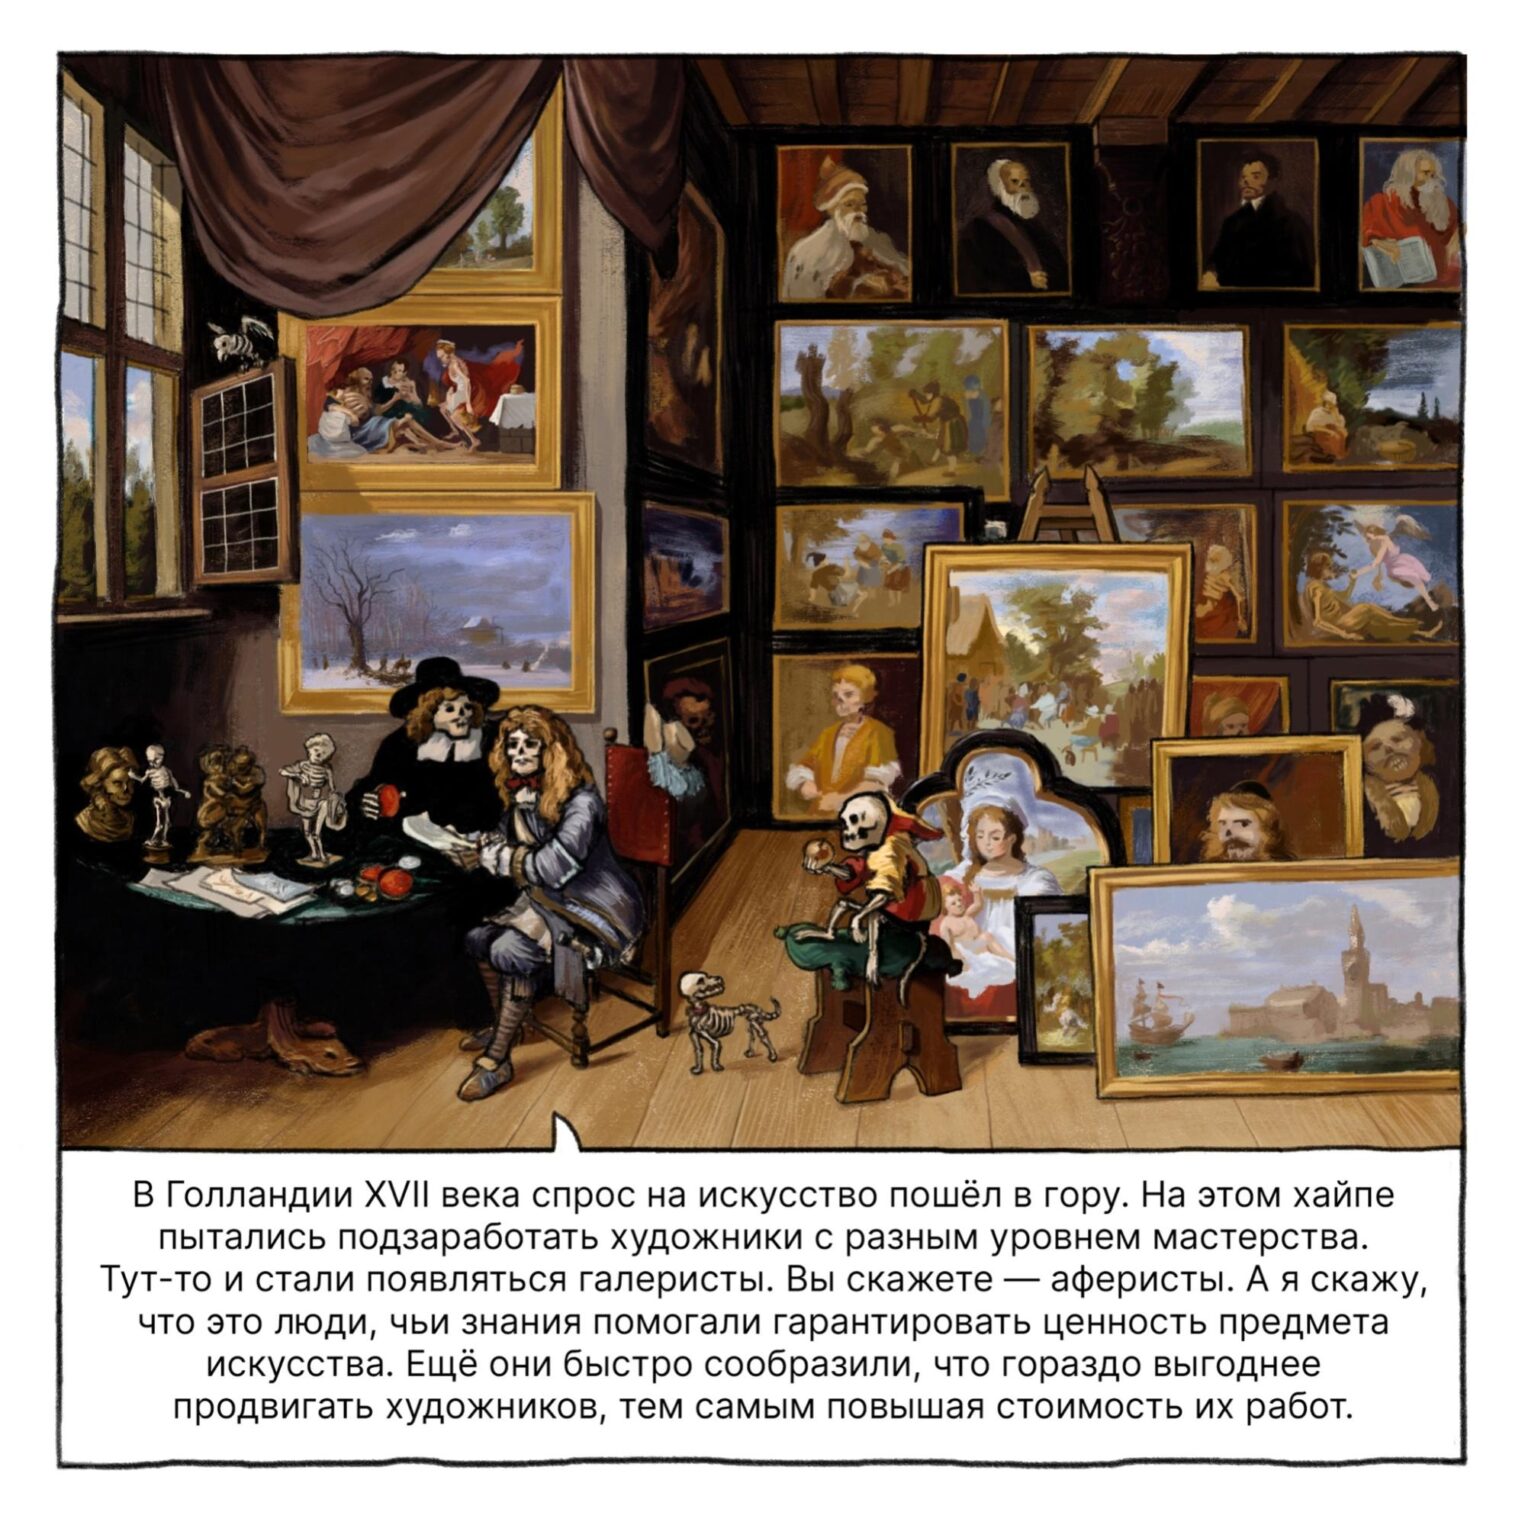 Комикс про искусство в Голландии XVII века.